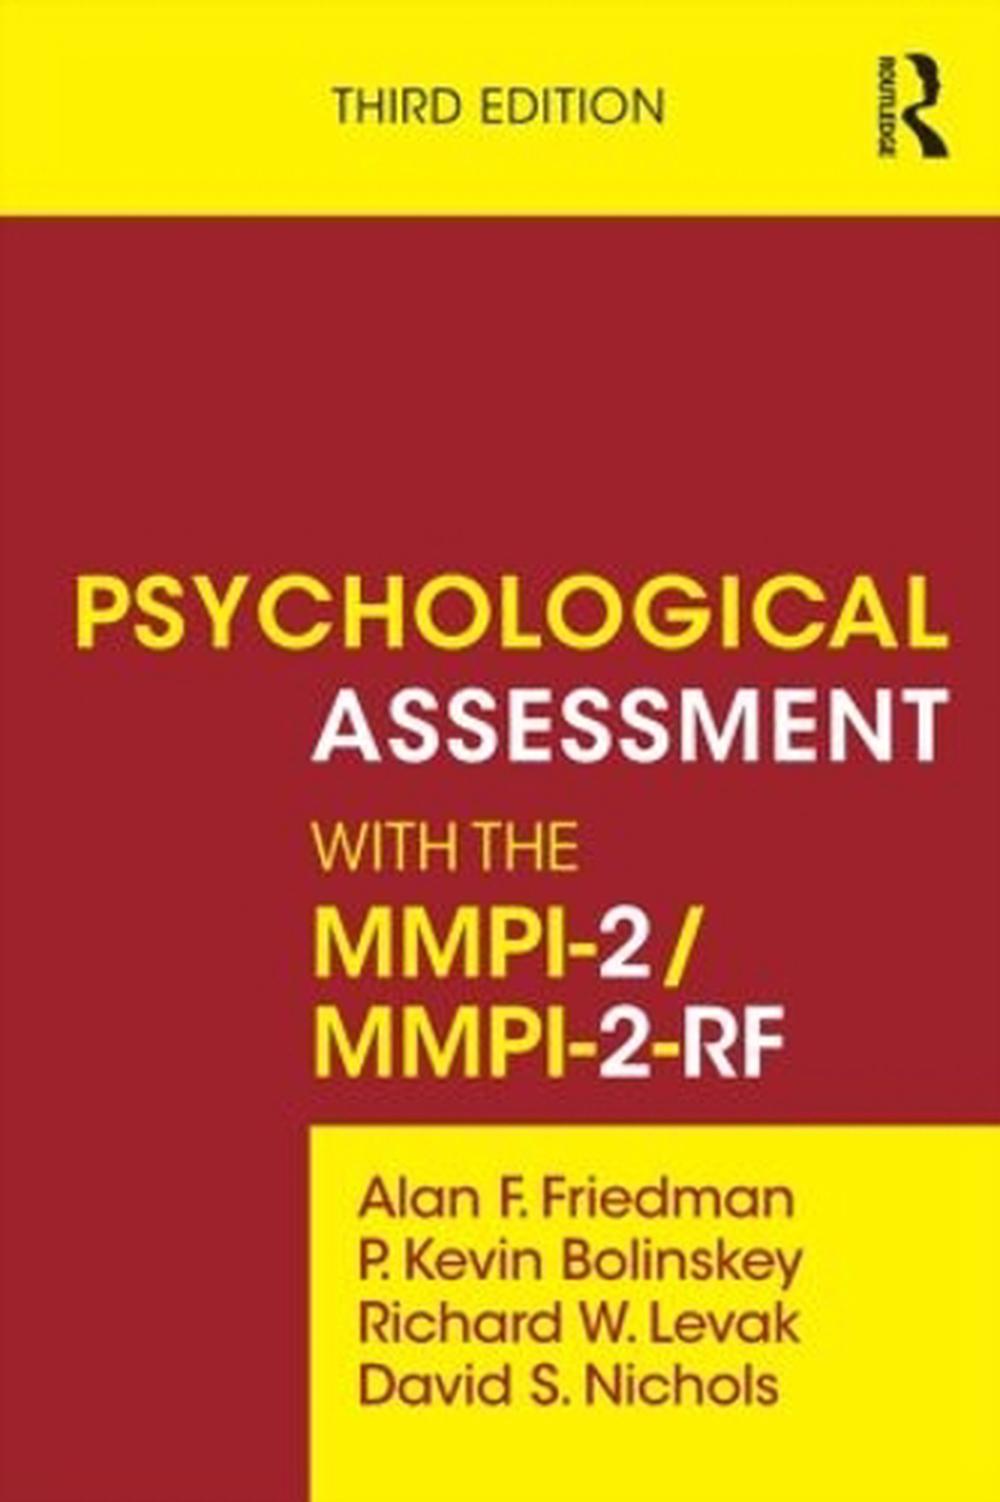 mmpi psychology test online